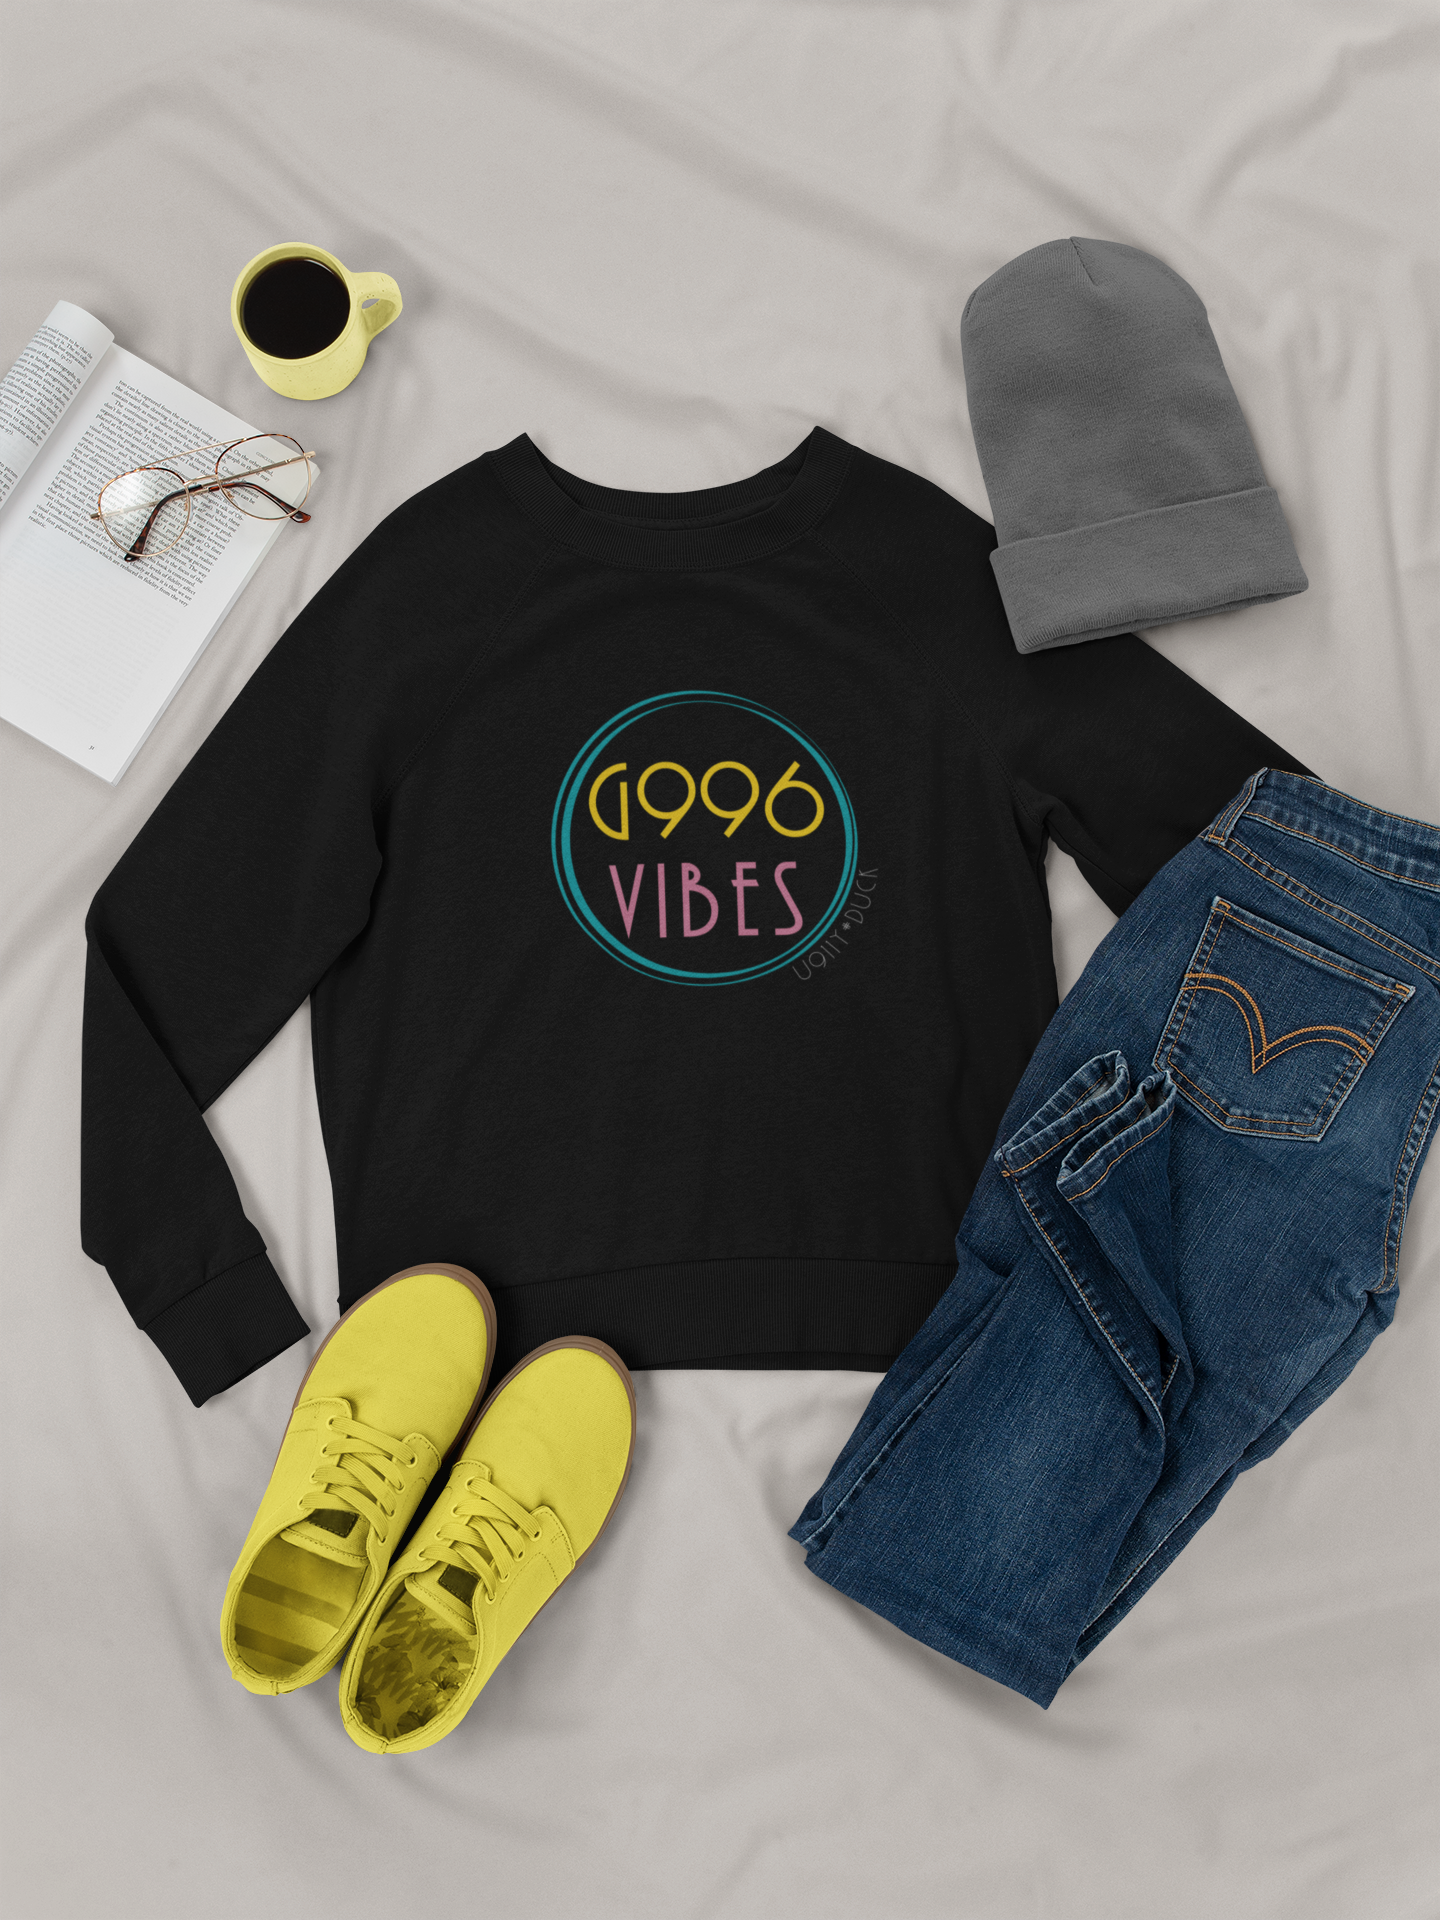 G996 VIBES Classic Adult Sweatshirt